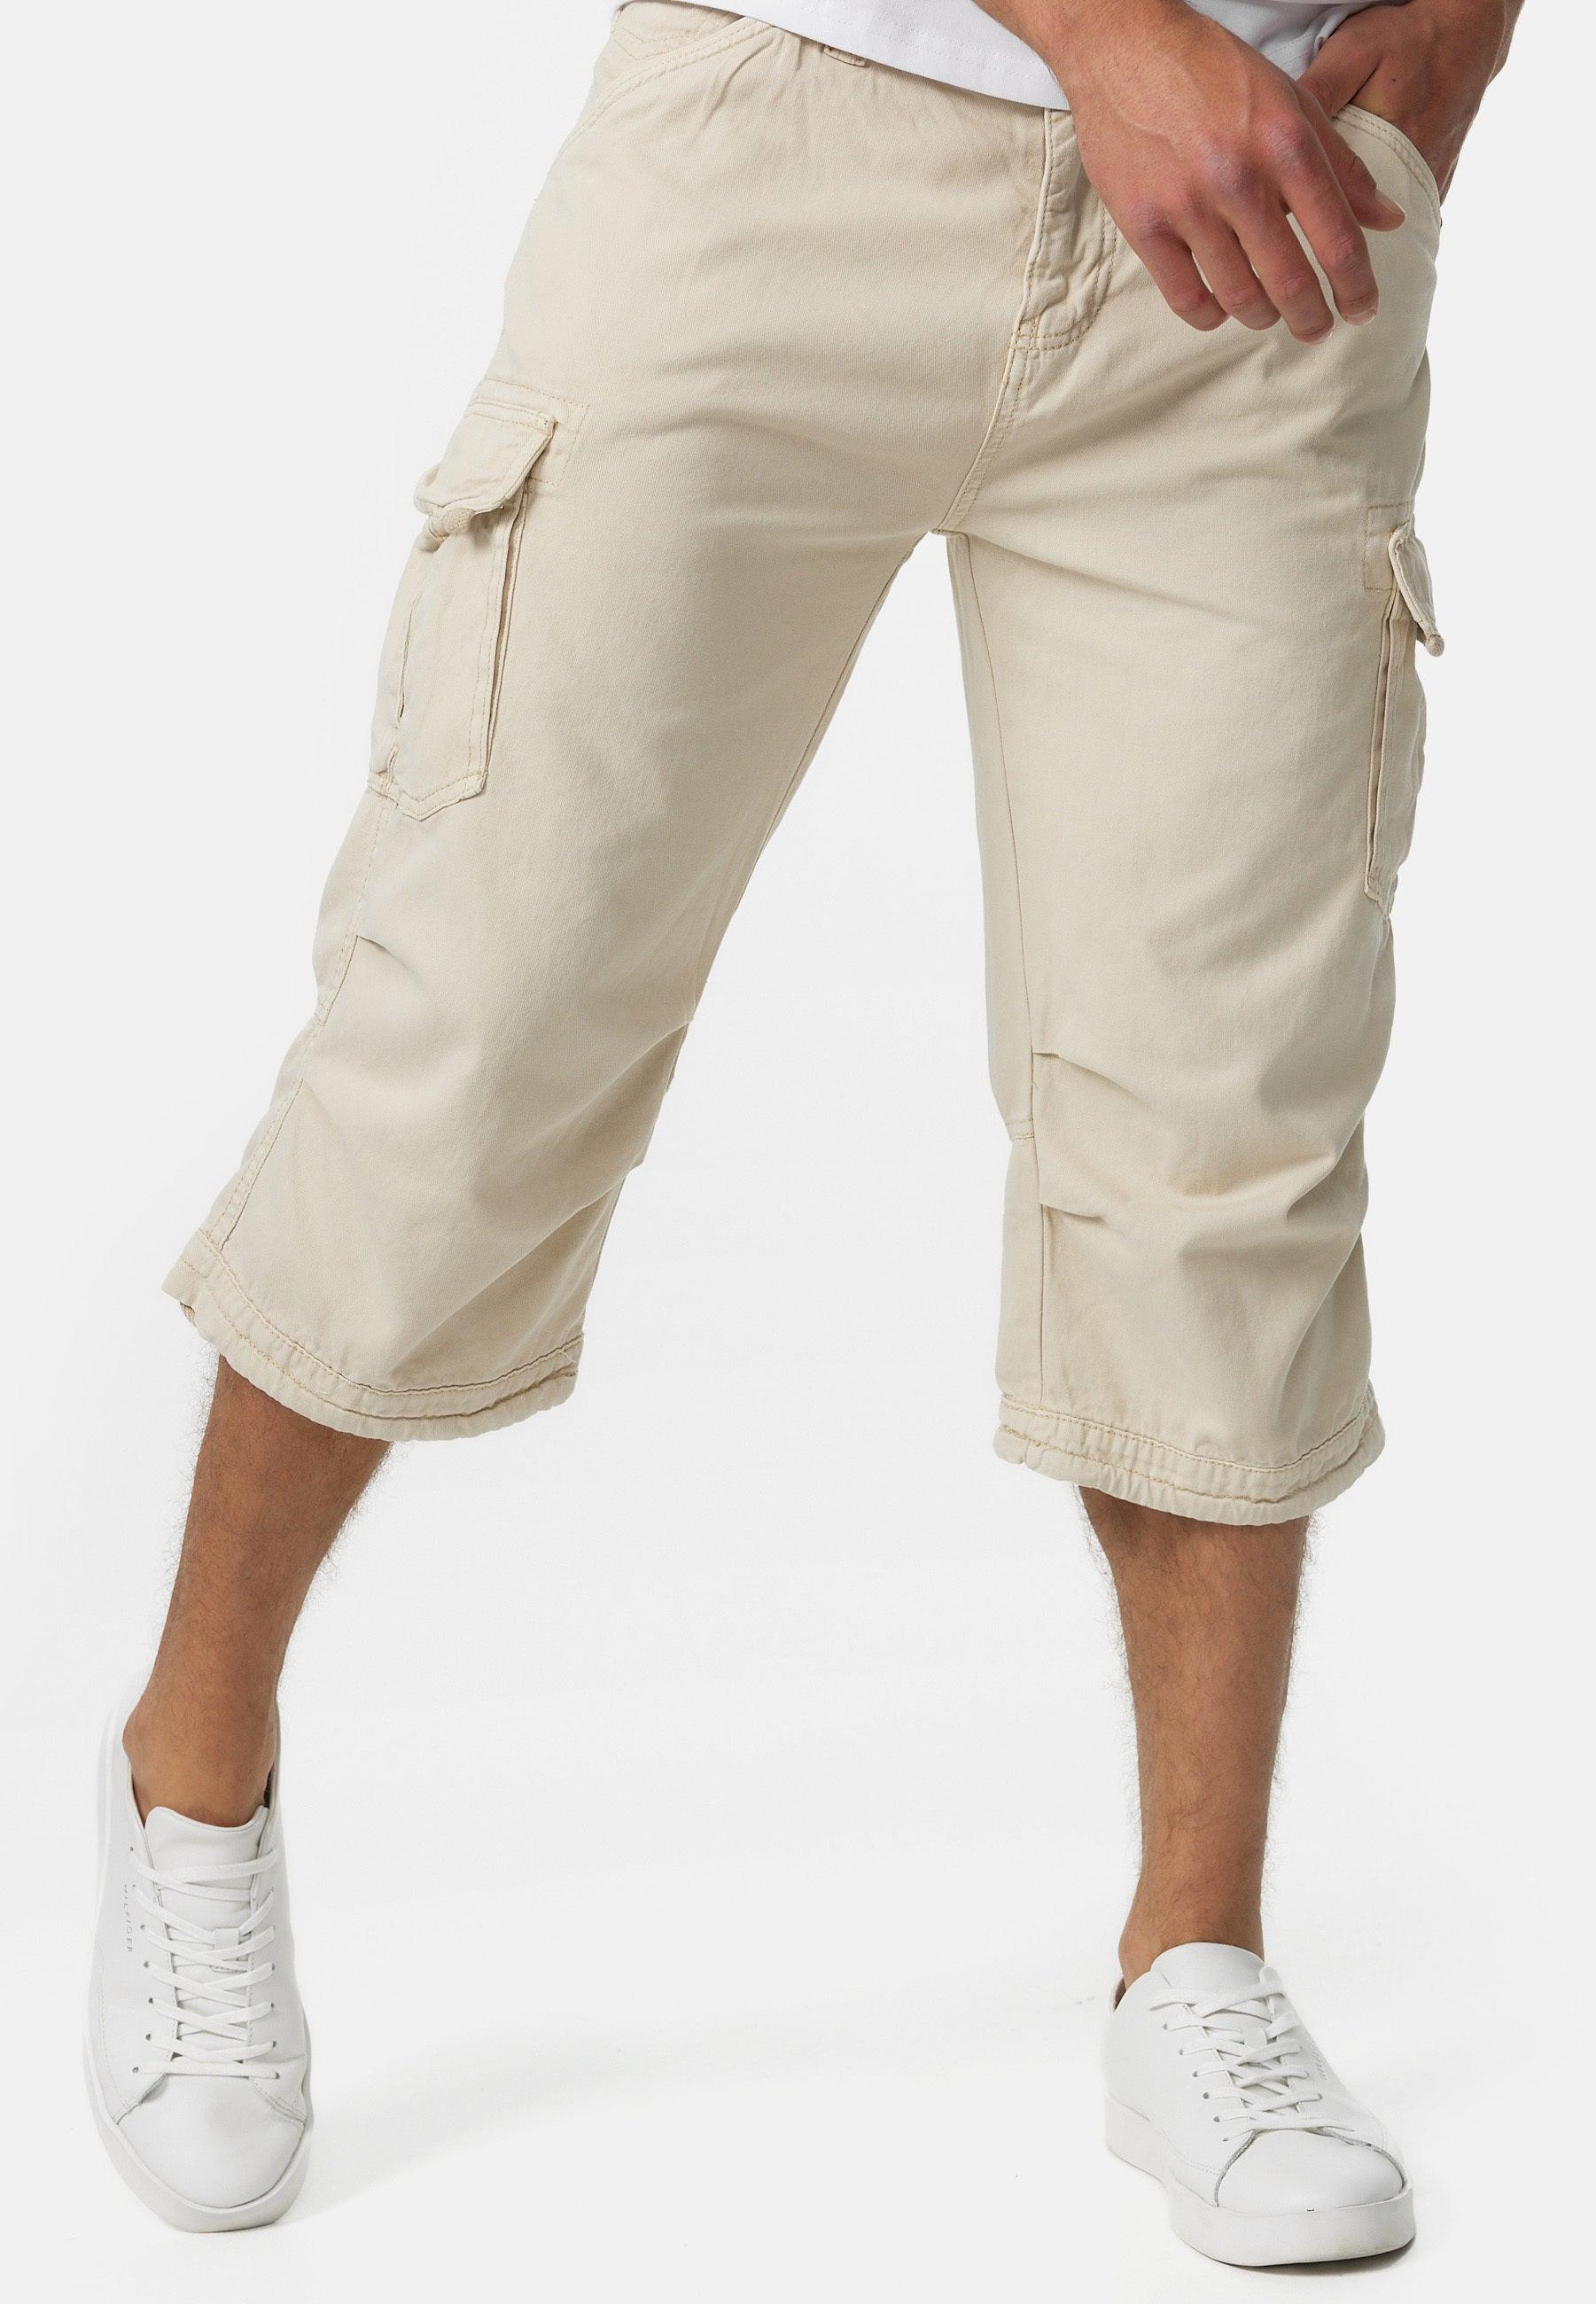 LEEy-World Mens Cargo Pants Men's Outdoor Hiking Pants Quick Dry  Lightweight Wind Sun Protection Running Jogger Zipper Pockets Grey,6XL -  Walmart.com